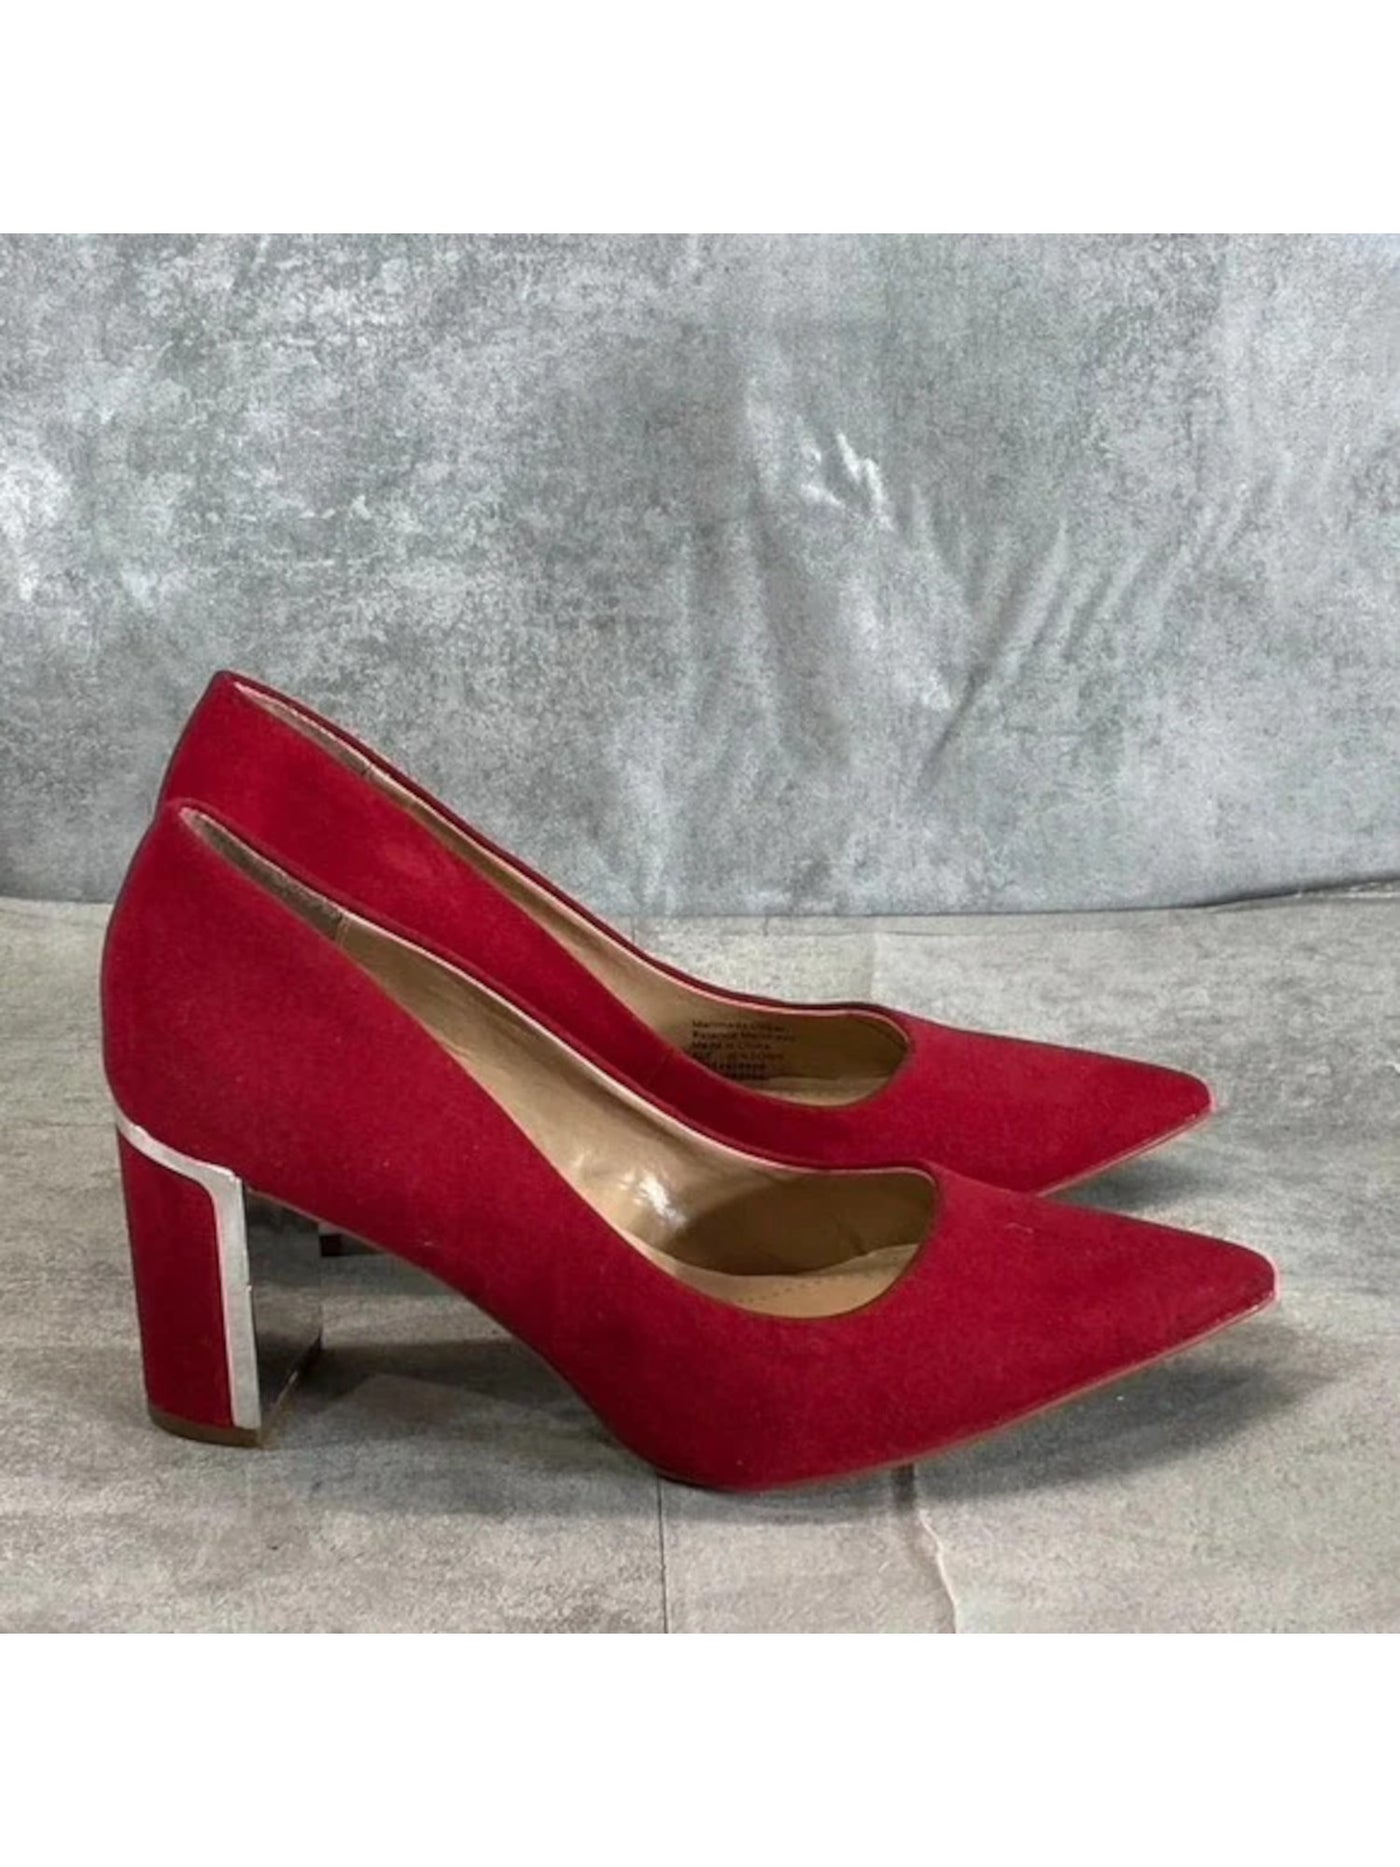 ALFANI Womens Red Metallic Heel Accent Cushioned Comfort Jensonn Pointed Toe Block Heel Slip On Leather Pumps Shoes 5.5 M